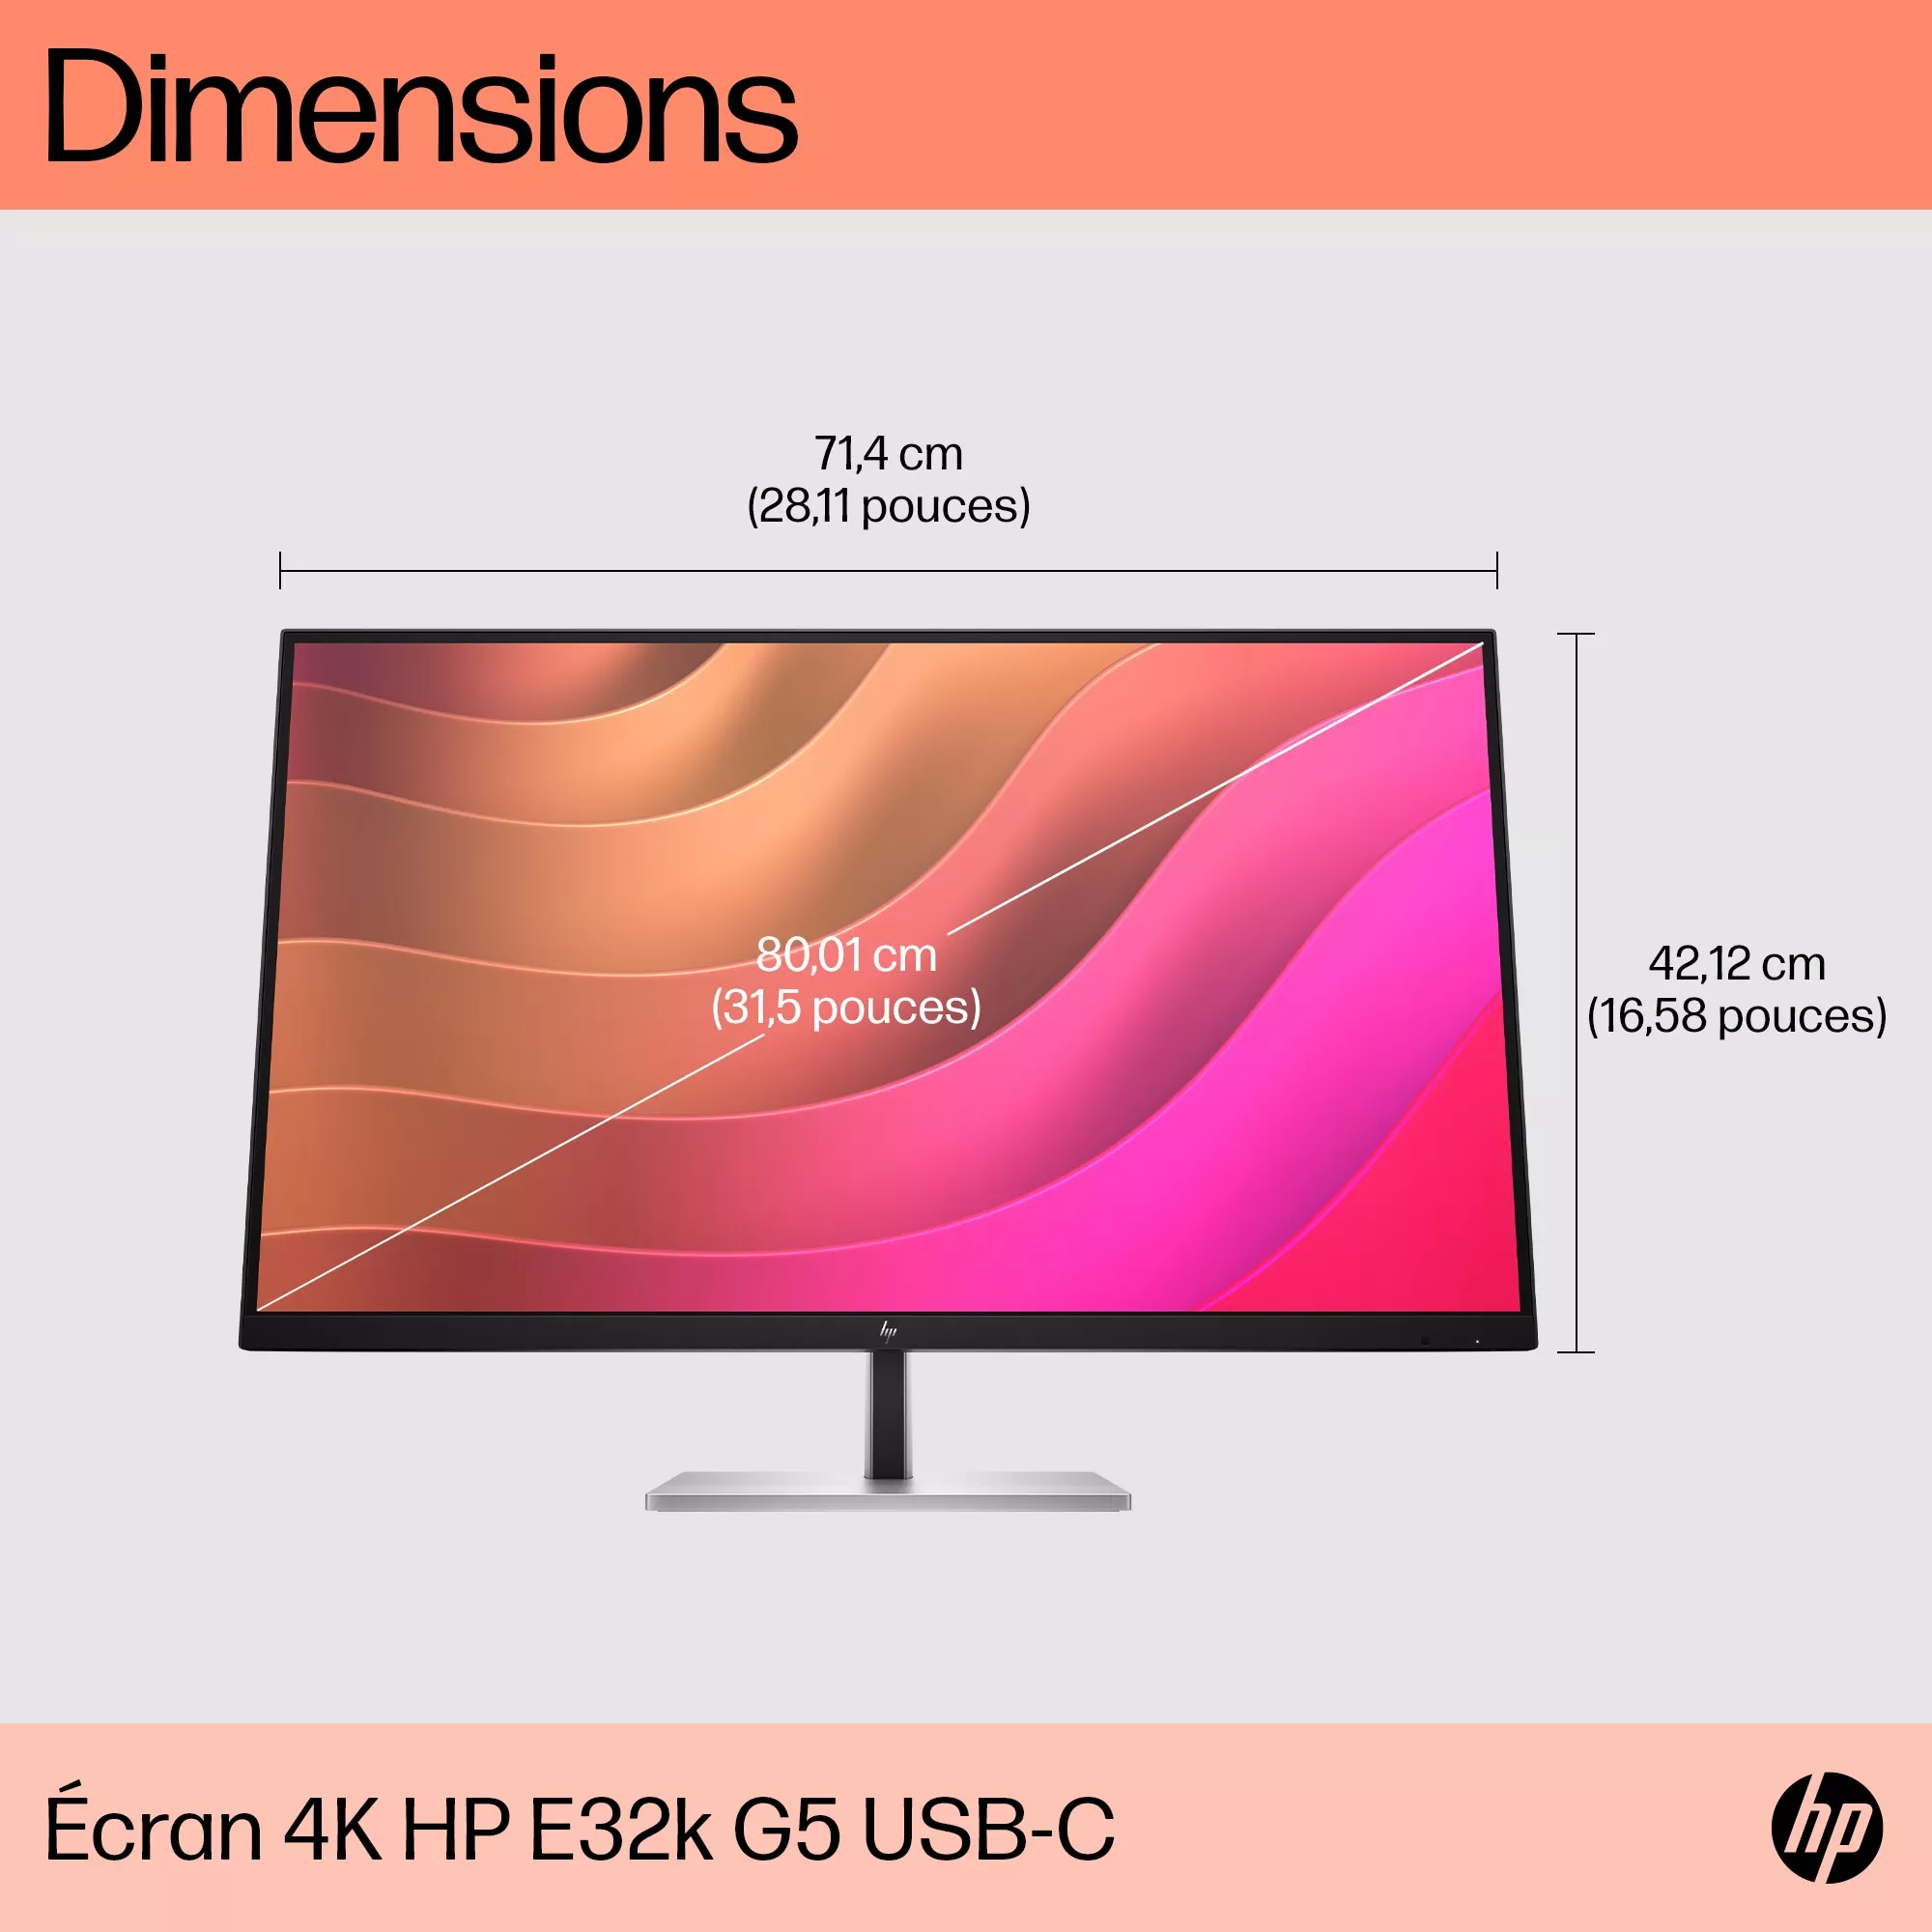 Vente HP E32k G5 USB-C Monitor 31.5p 4K HDMI HP au meilleur prix - visuel 6